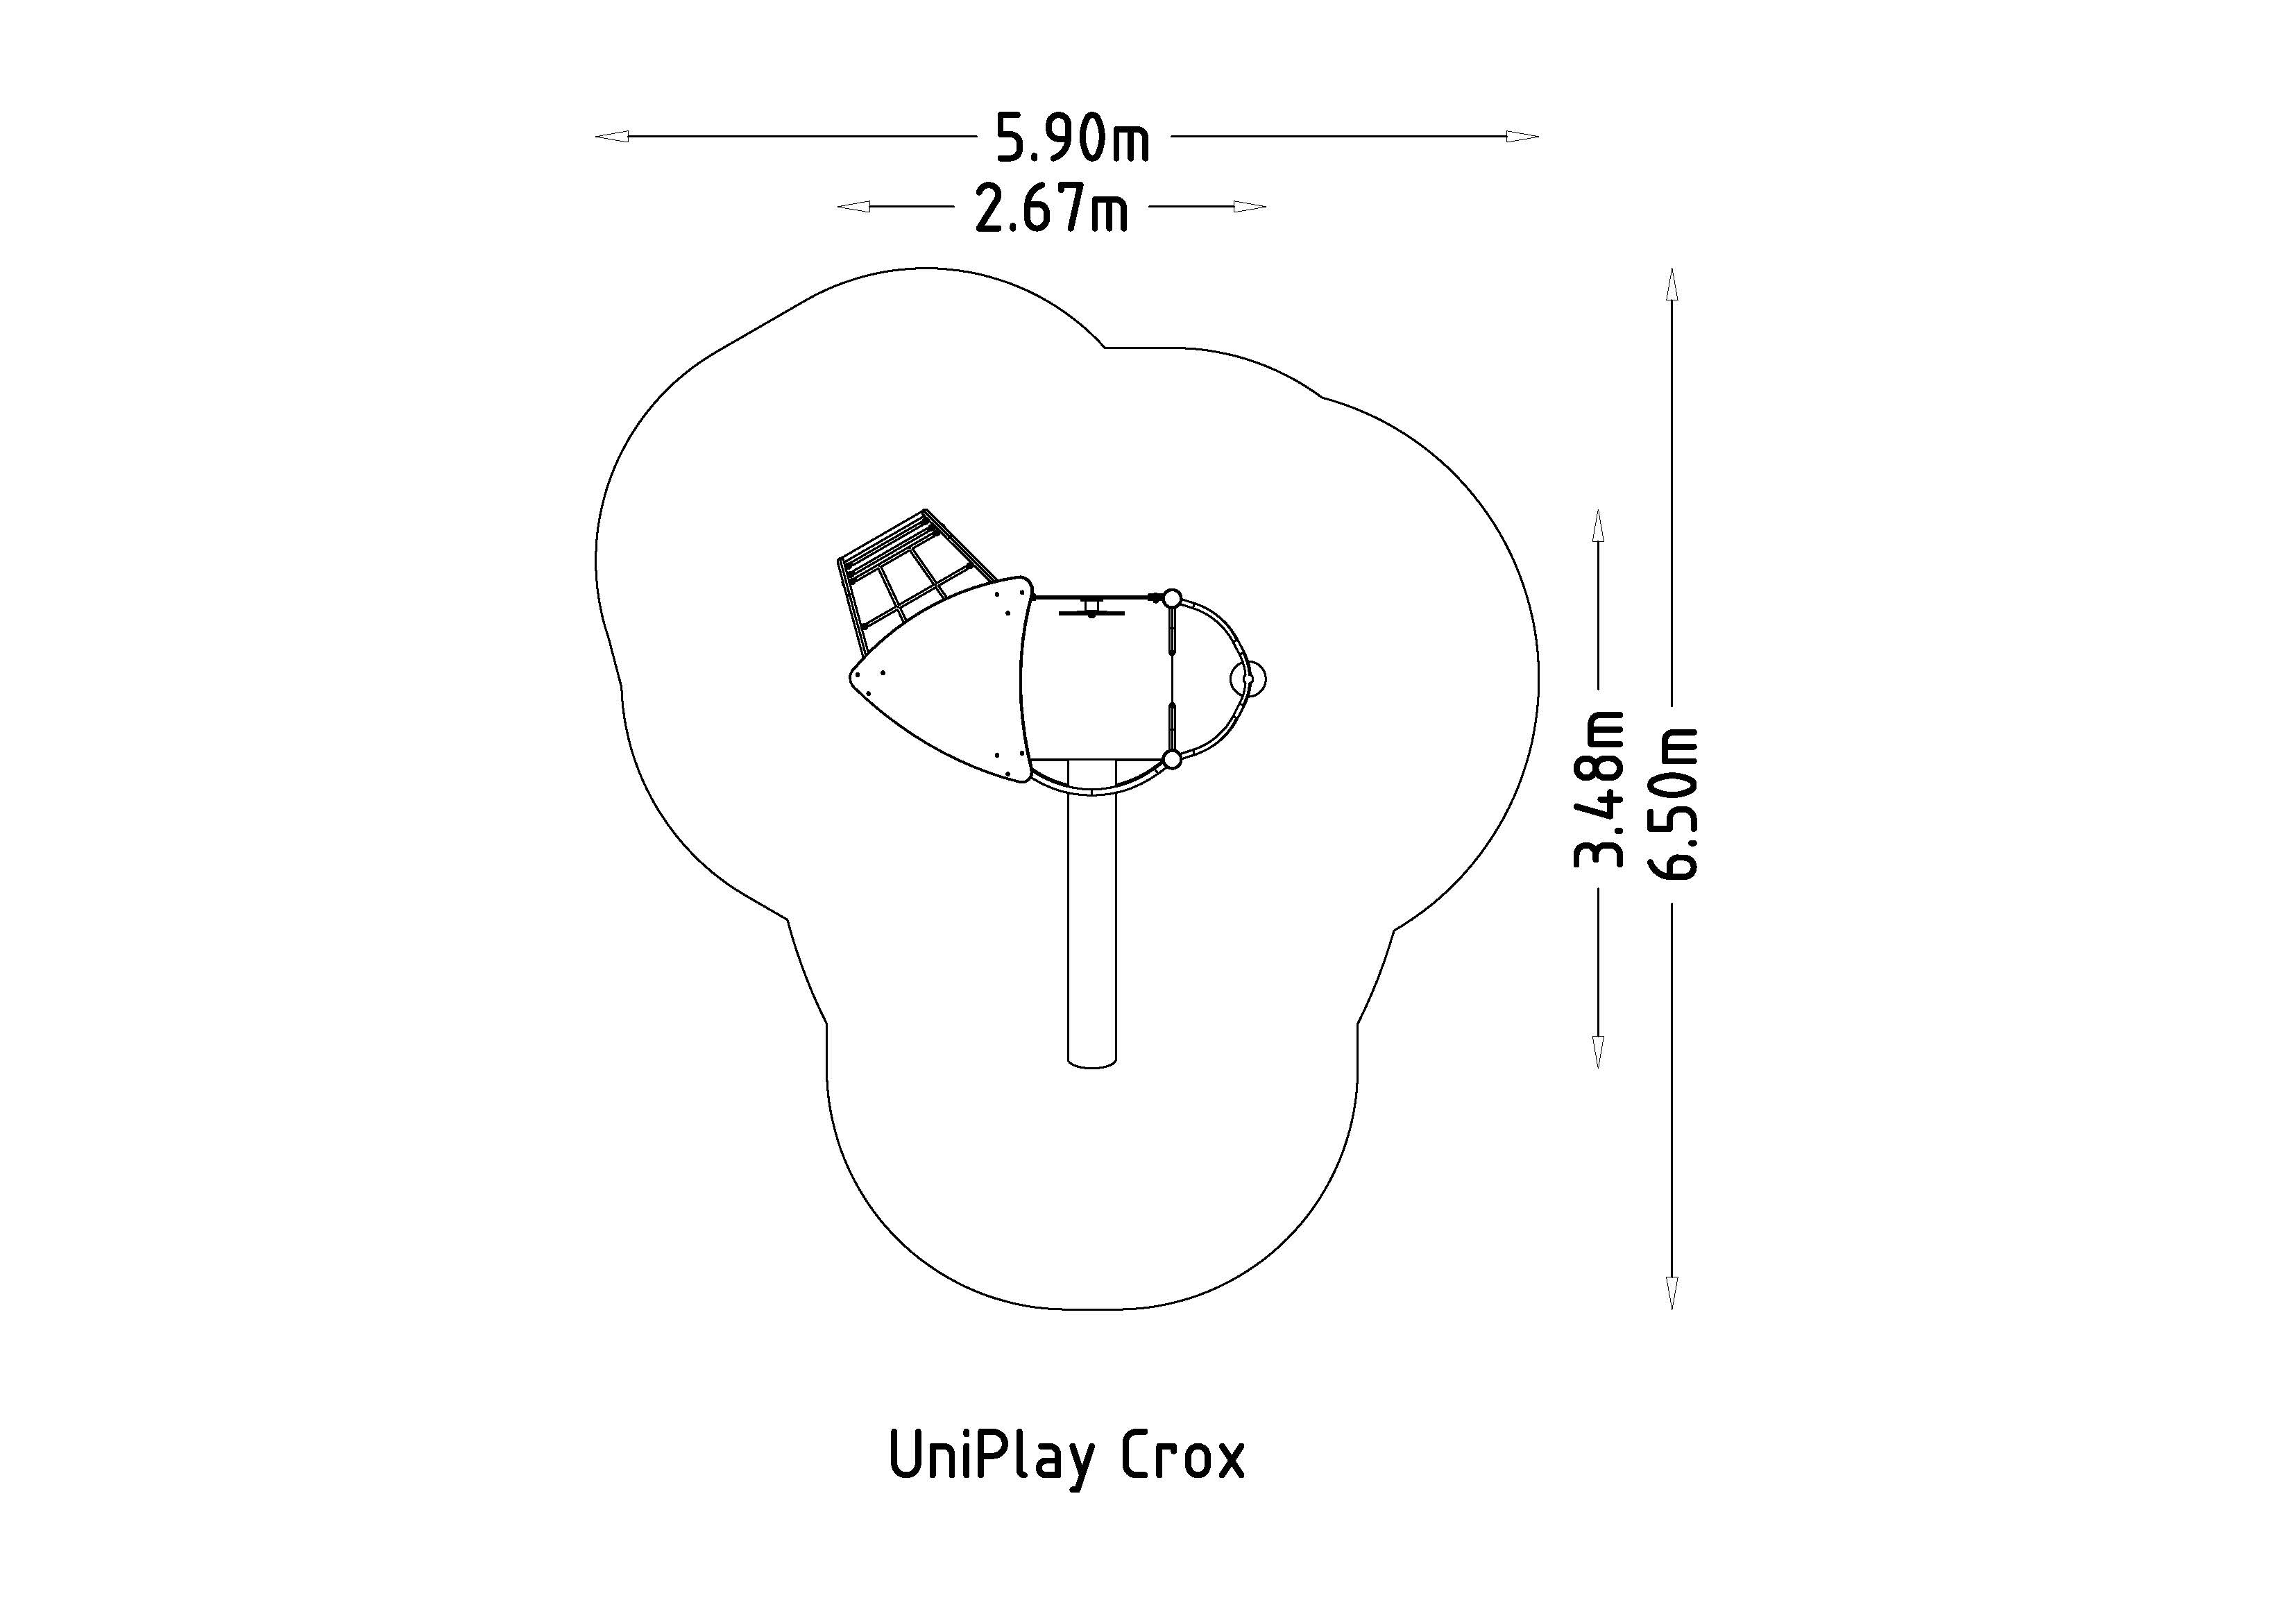 UniPlay Crox